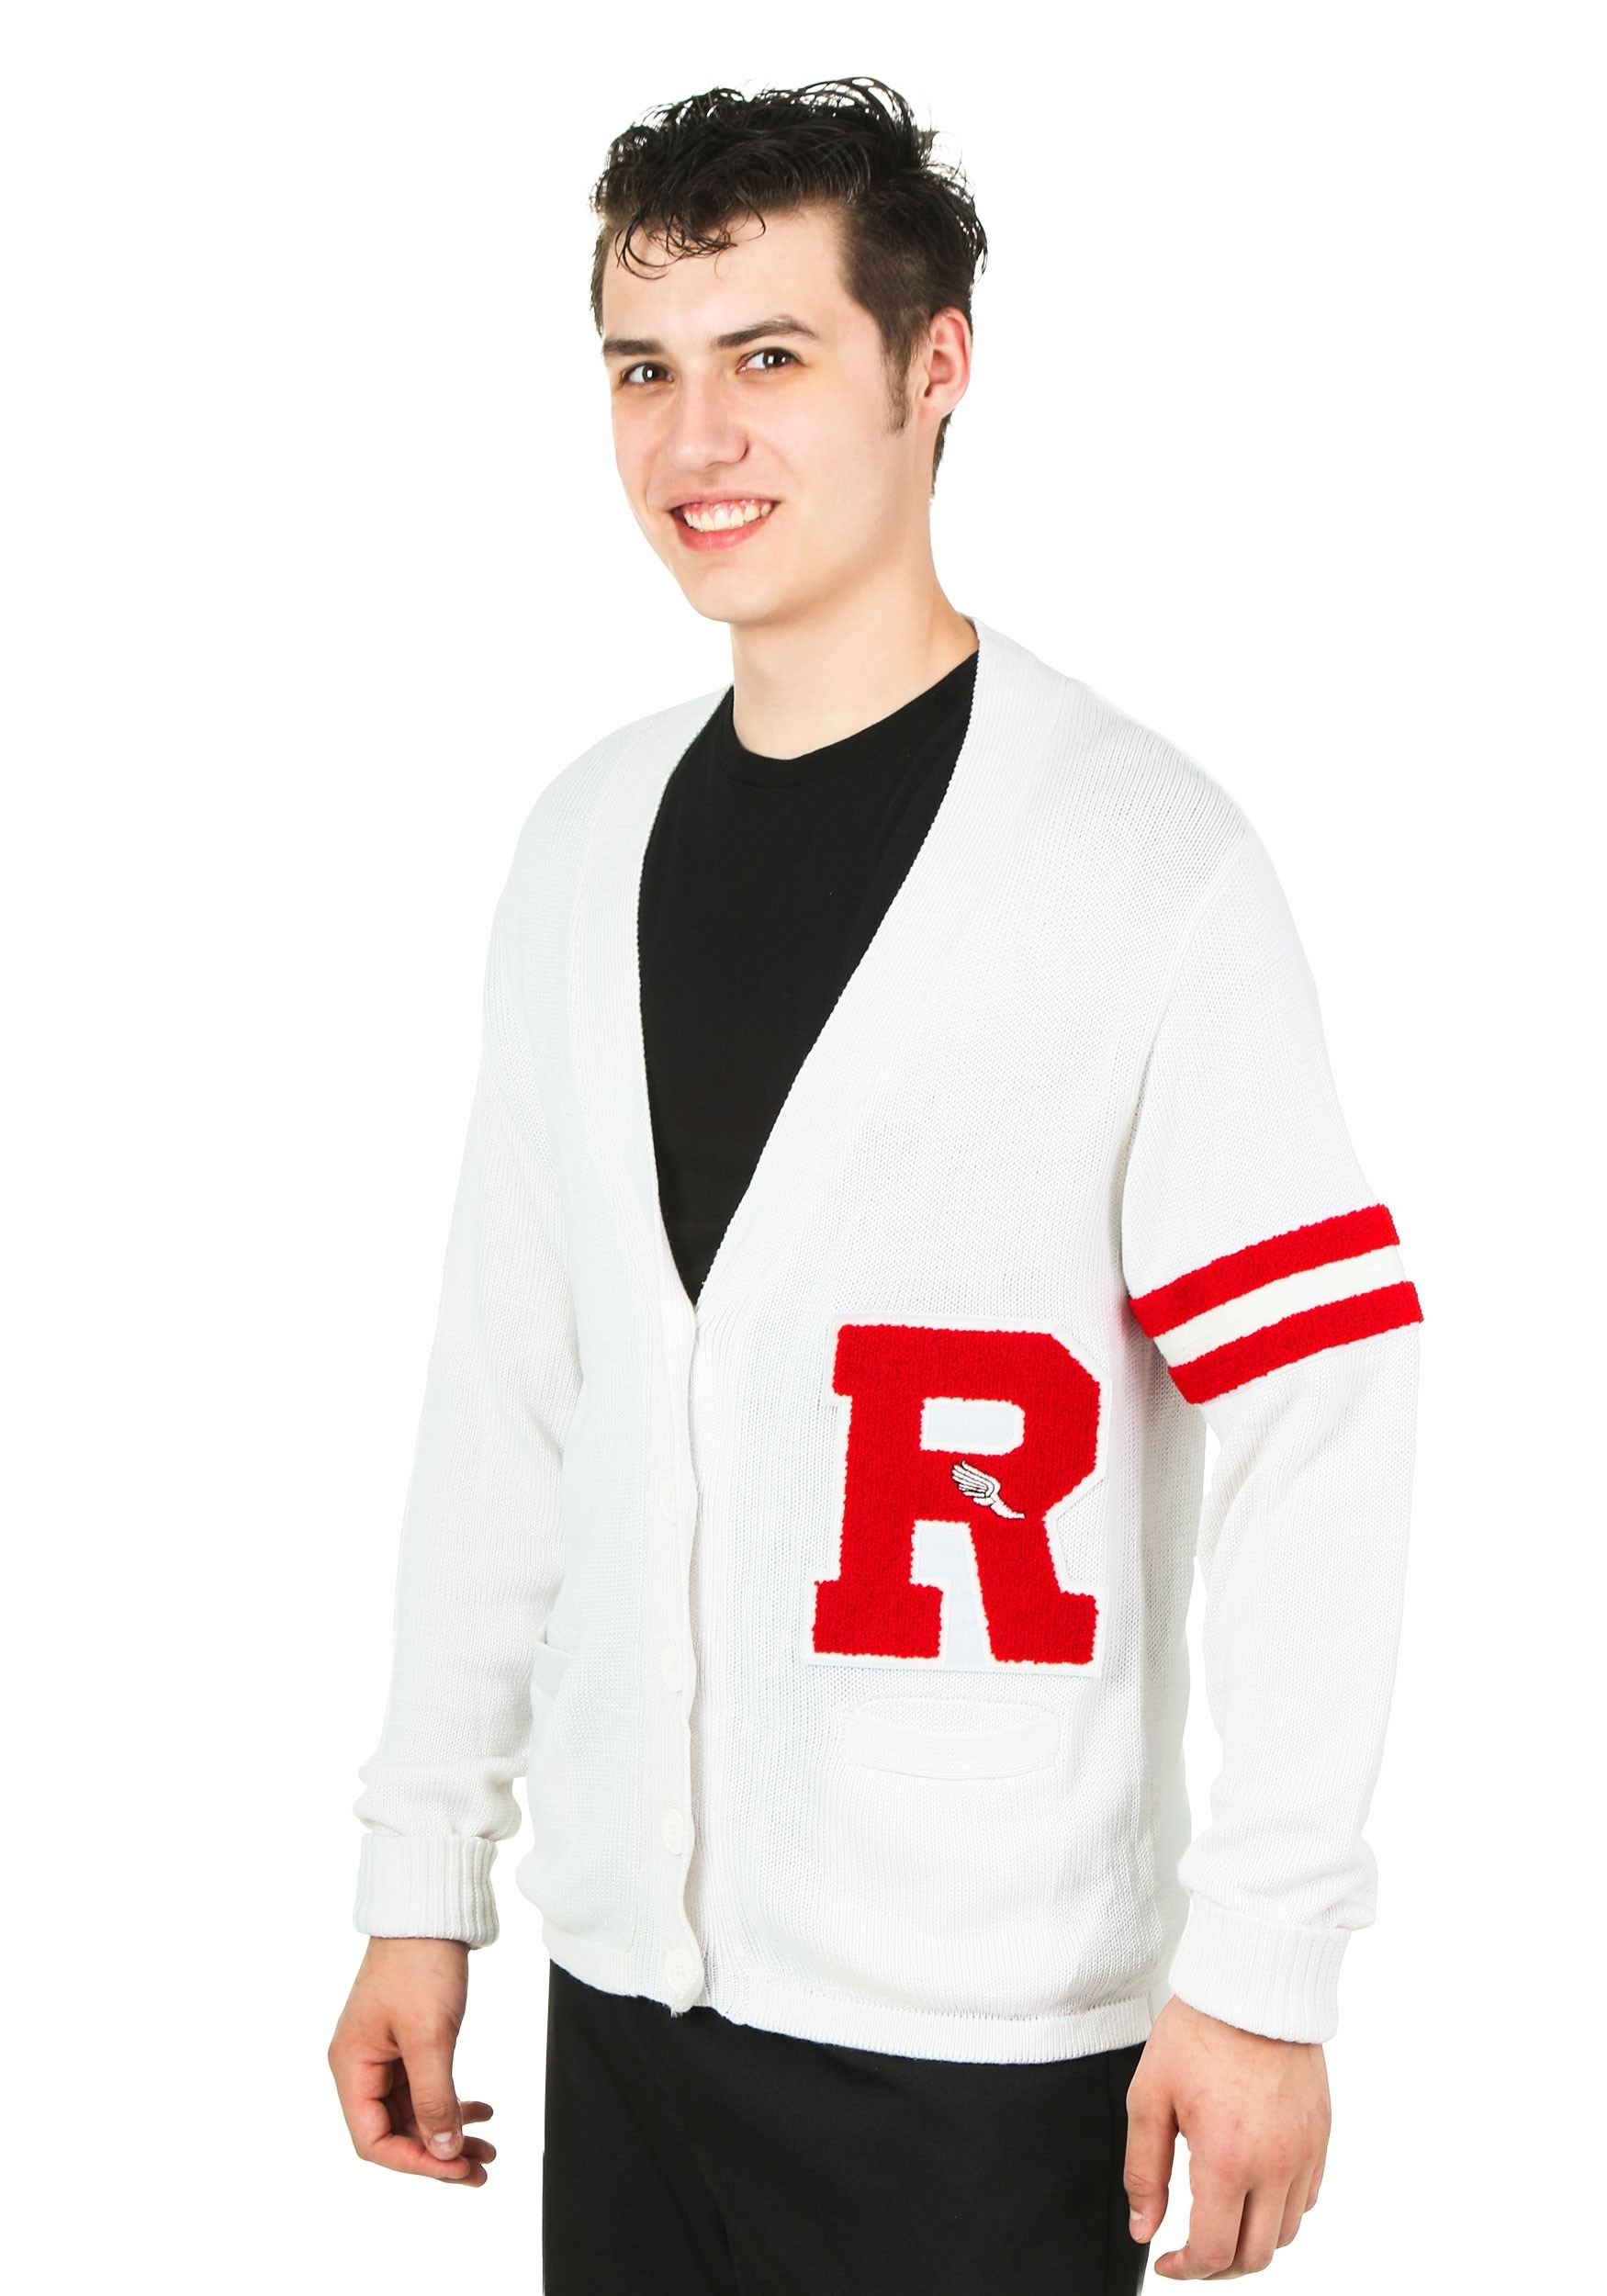 Grease Rydell High Letter Sweater Costume for Men